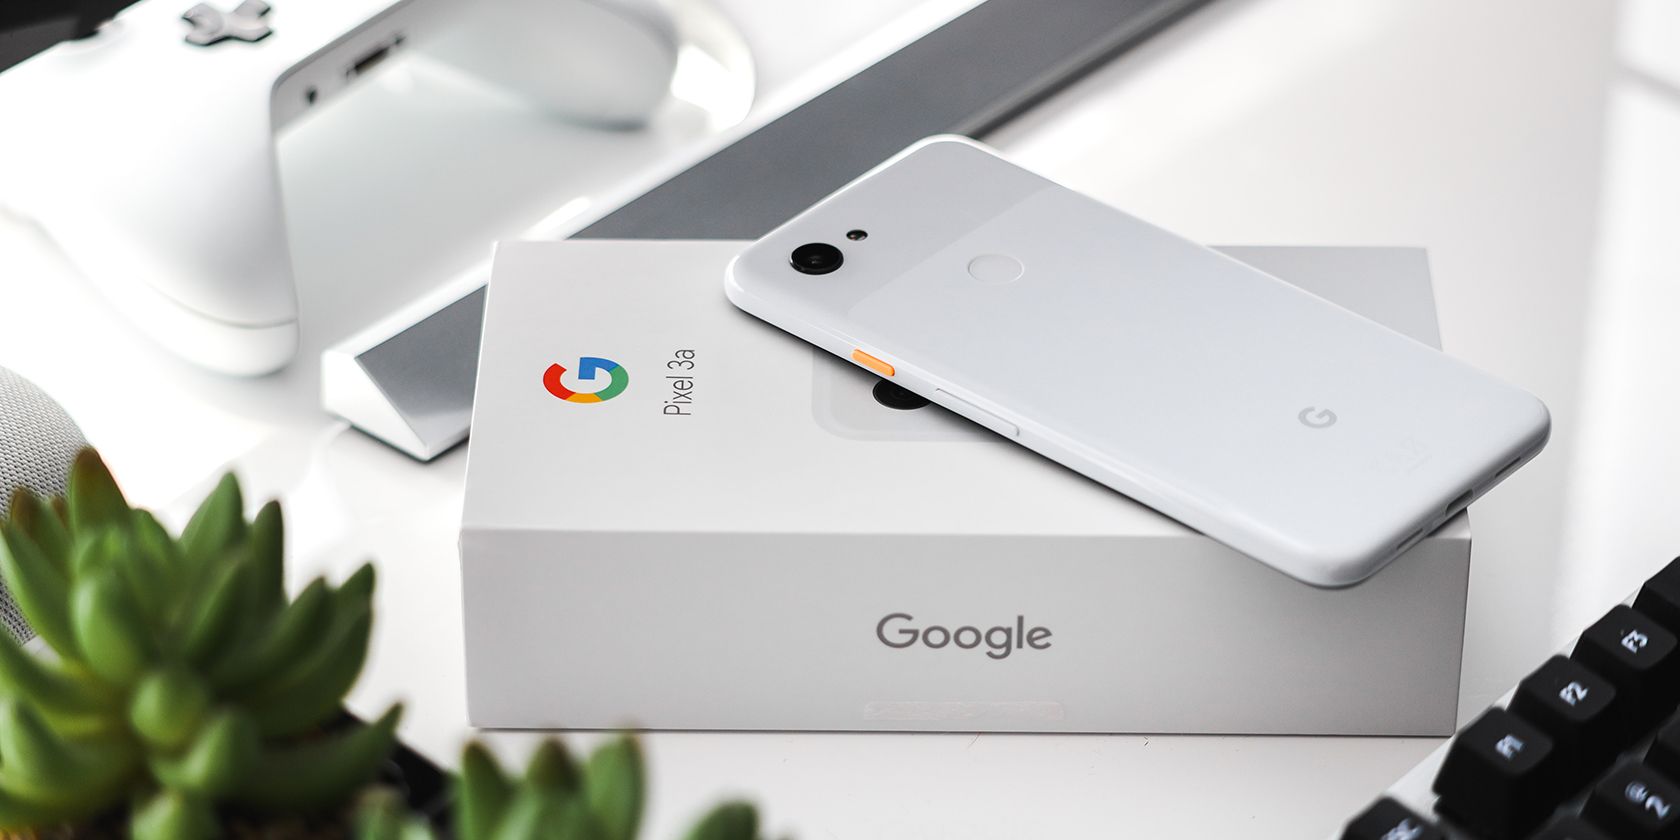 Google Pixel phone in white